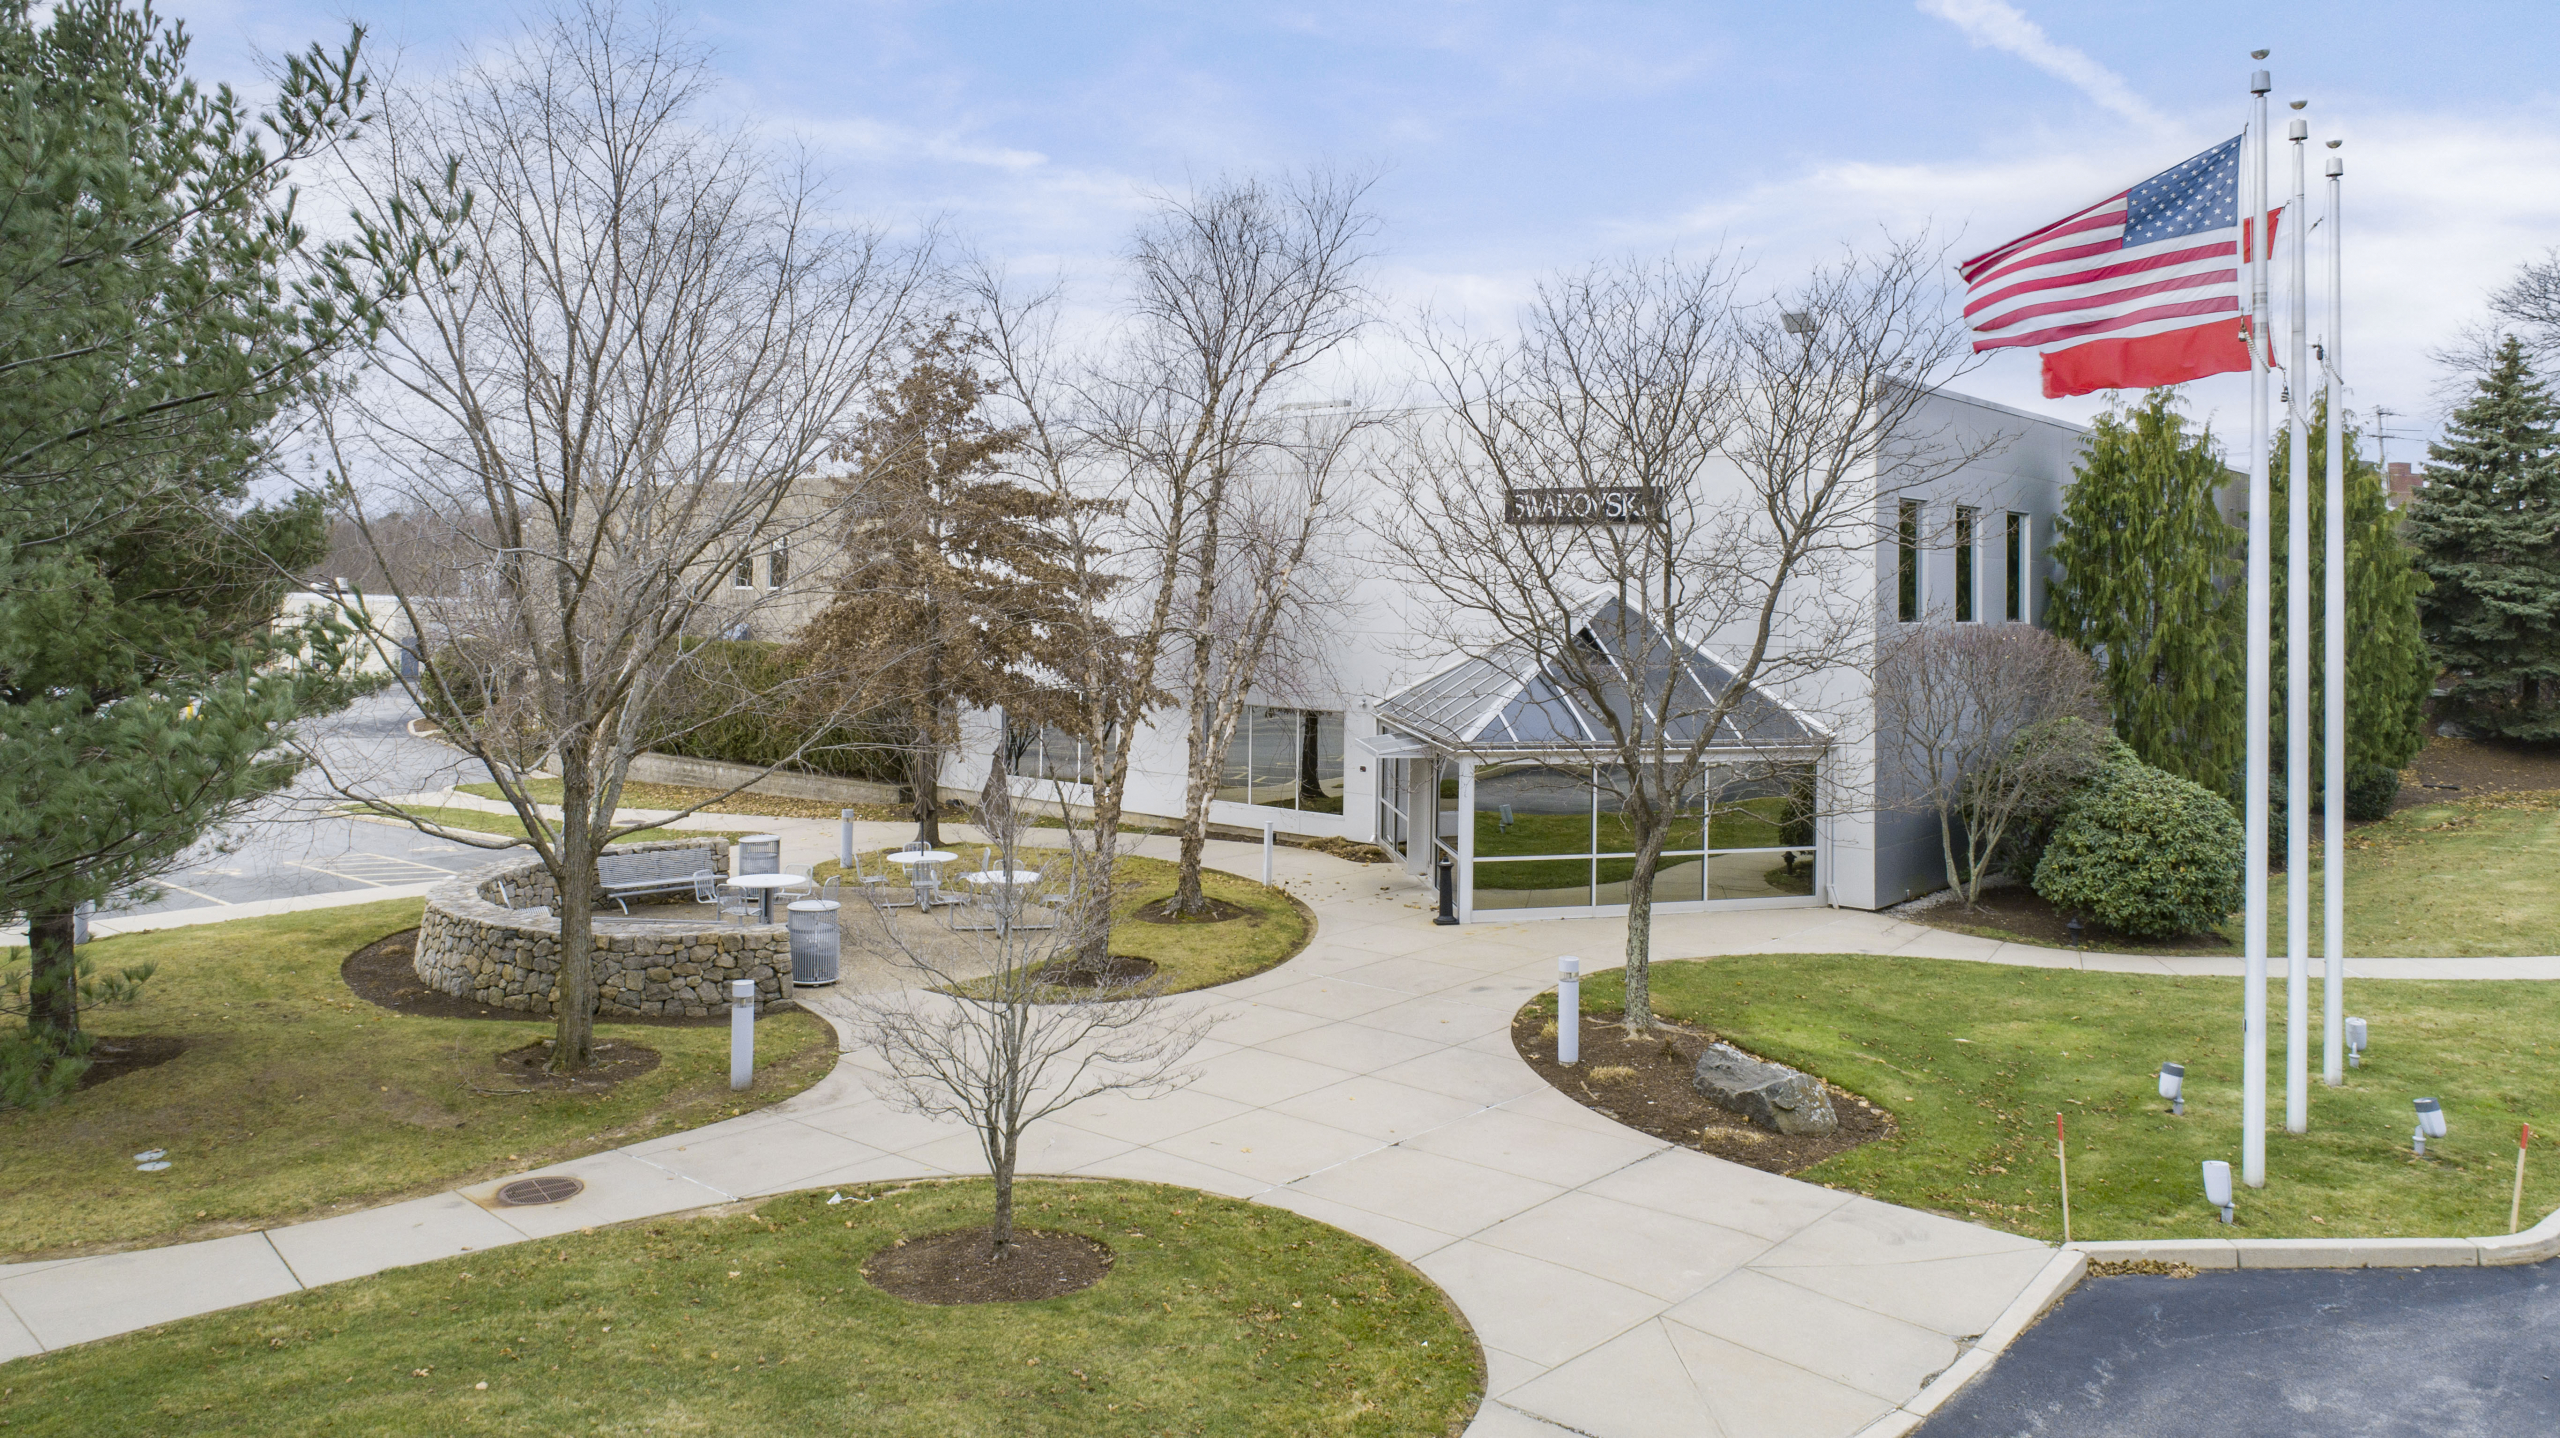 Swarovski office building in Cranston sells for $8.8M